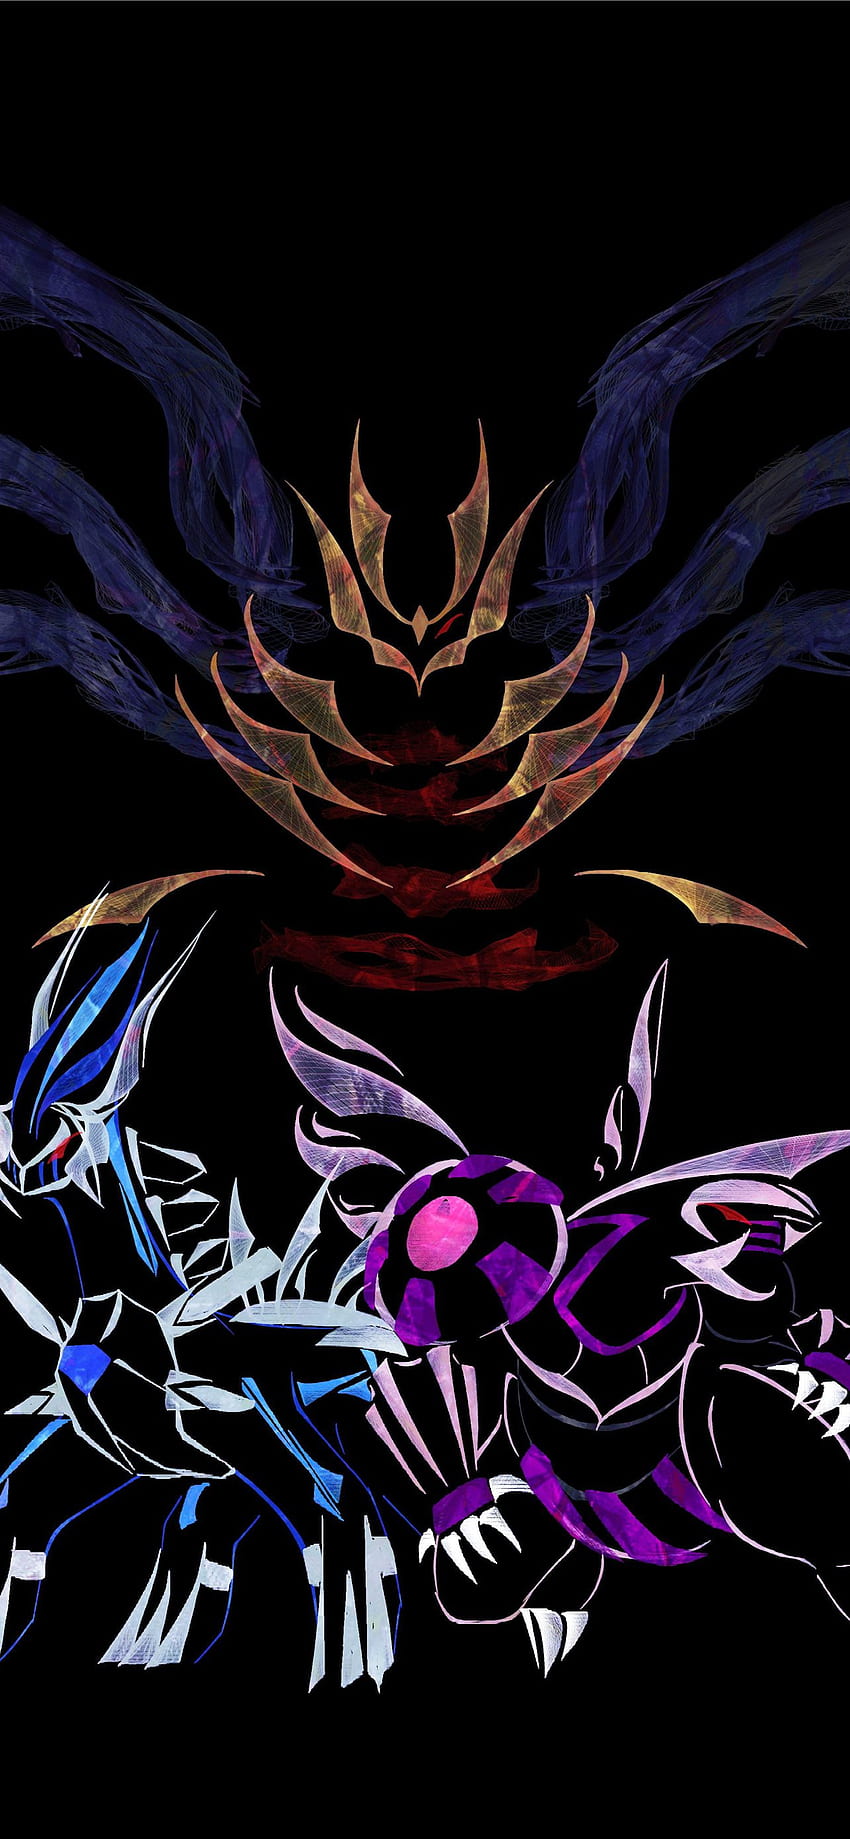 giratina, dialga, palkia, and giratina (pokemon) drawn by akihorisu